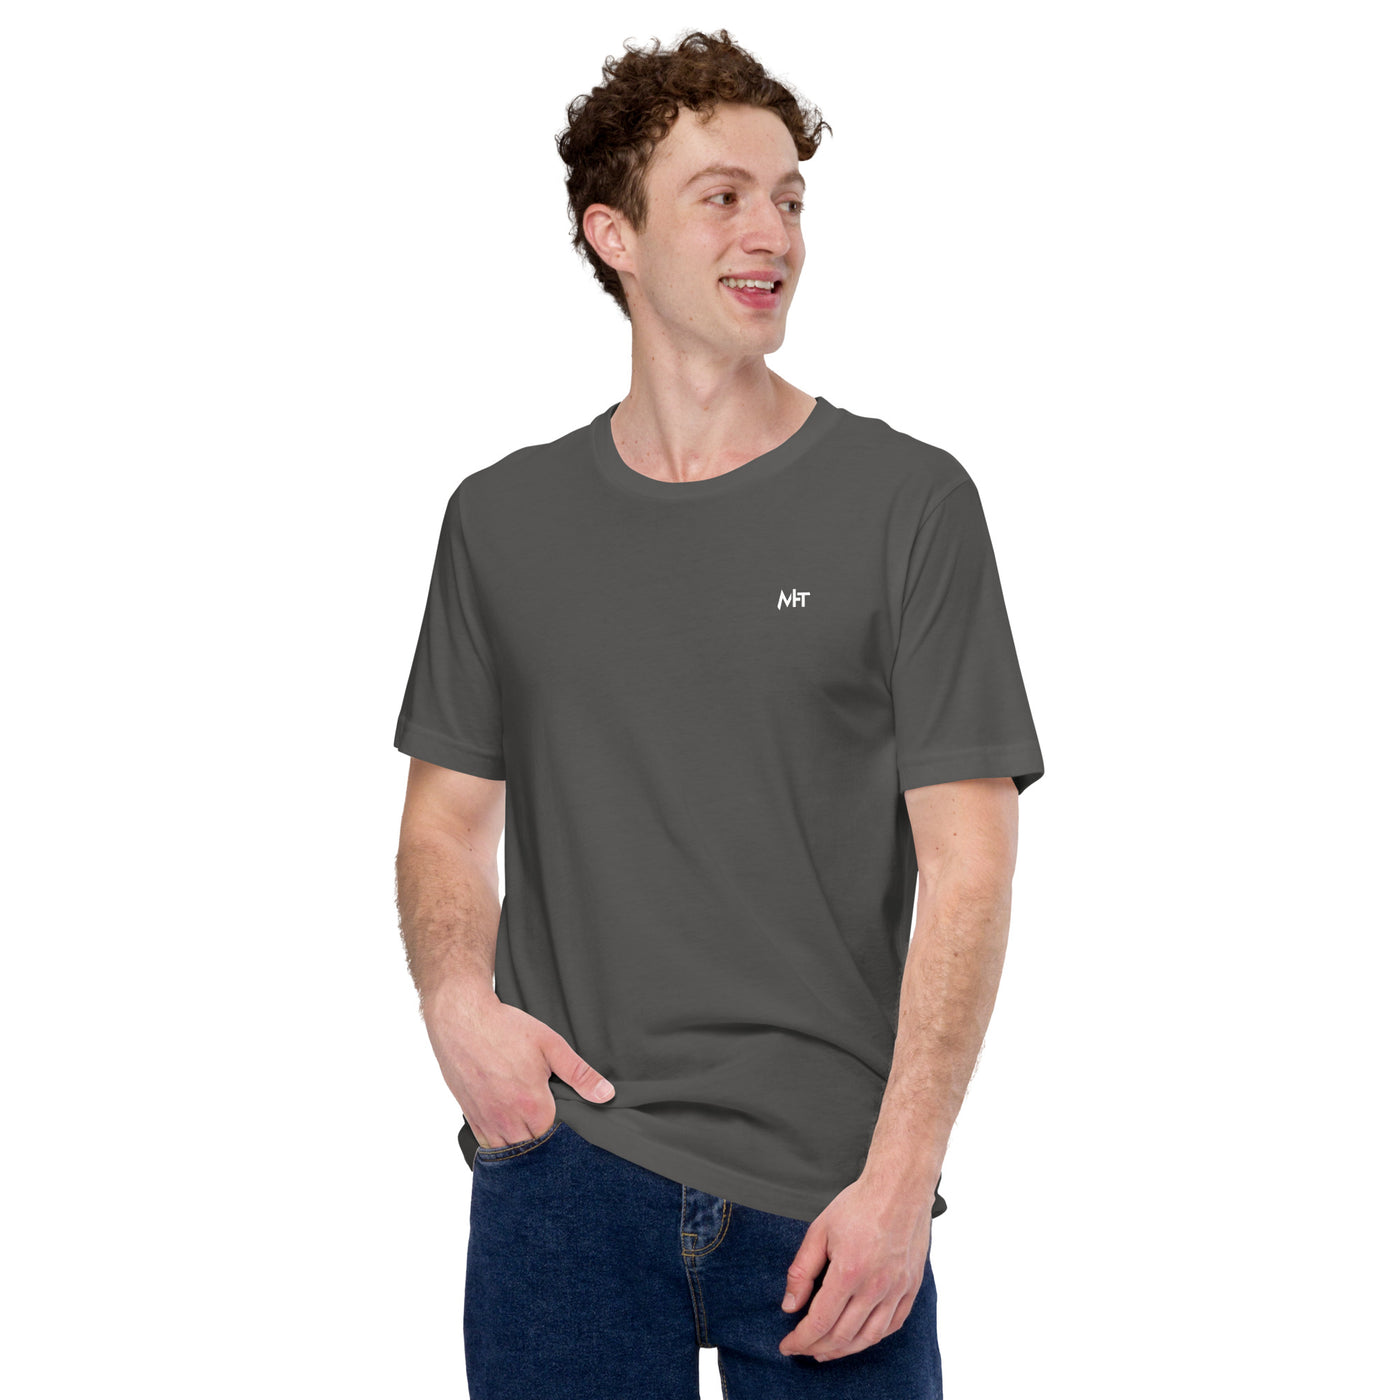 Patriotic Software Developer - Unisex t-shirt ( Back Print )